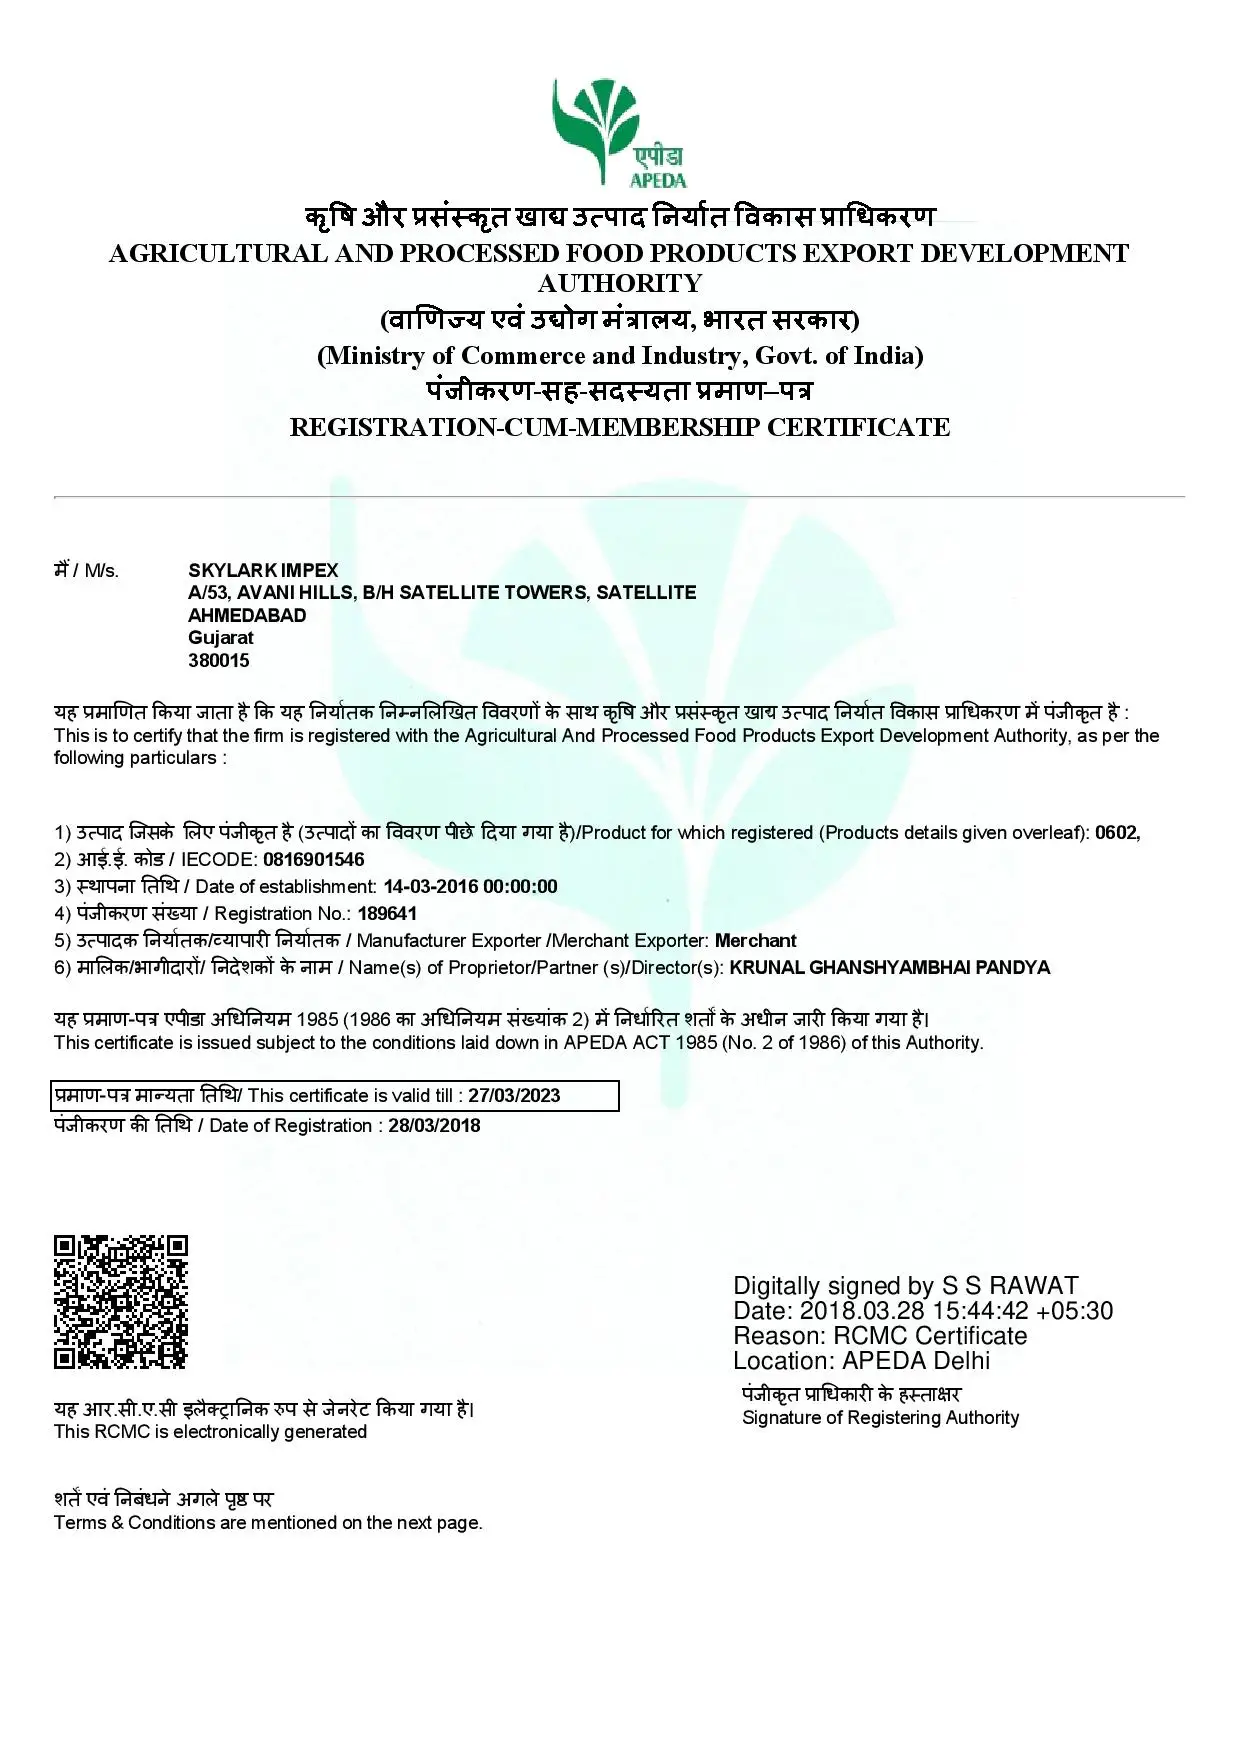 RCMC_Certificate_APEDA.jpg